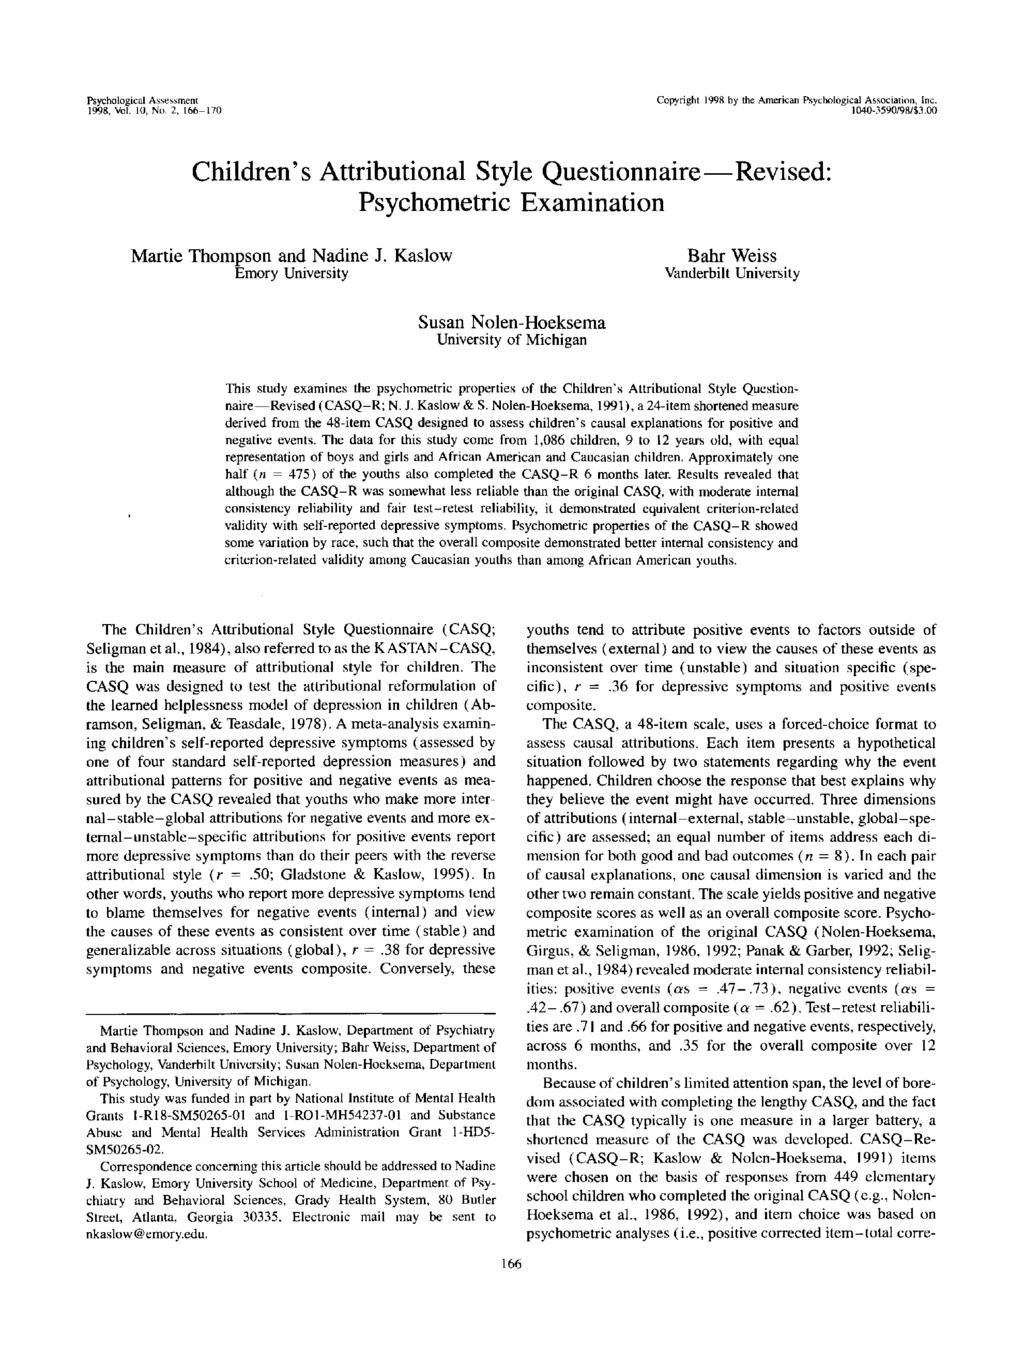 Psychological Assessment 1998, Vol. 10, No. 2, 166-170 Copyright 1998 by the American Psychological Association, Inc. 1040-3590/98/J3.